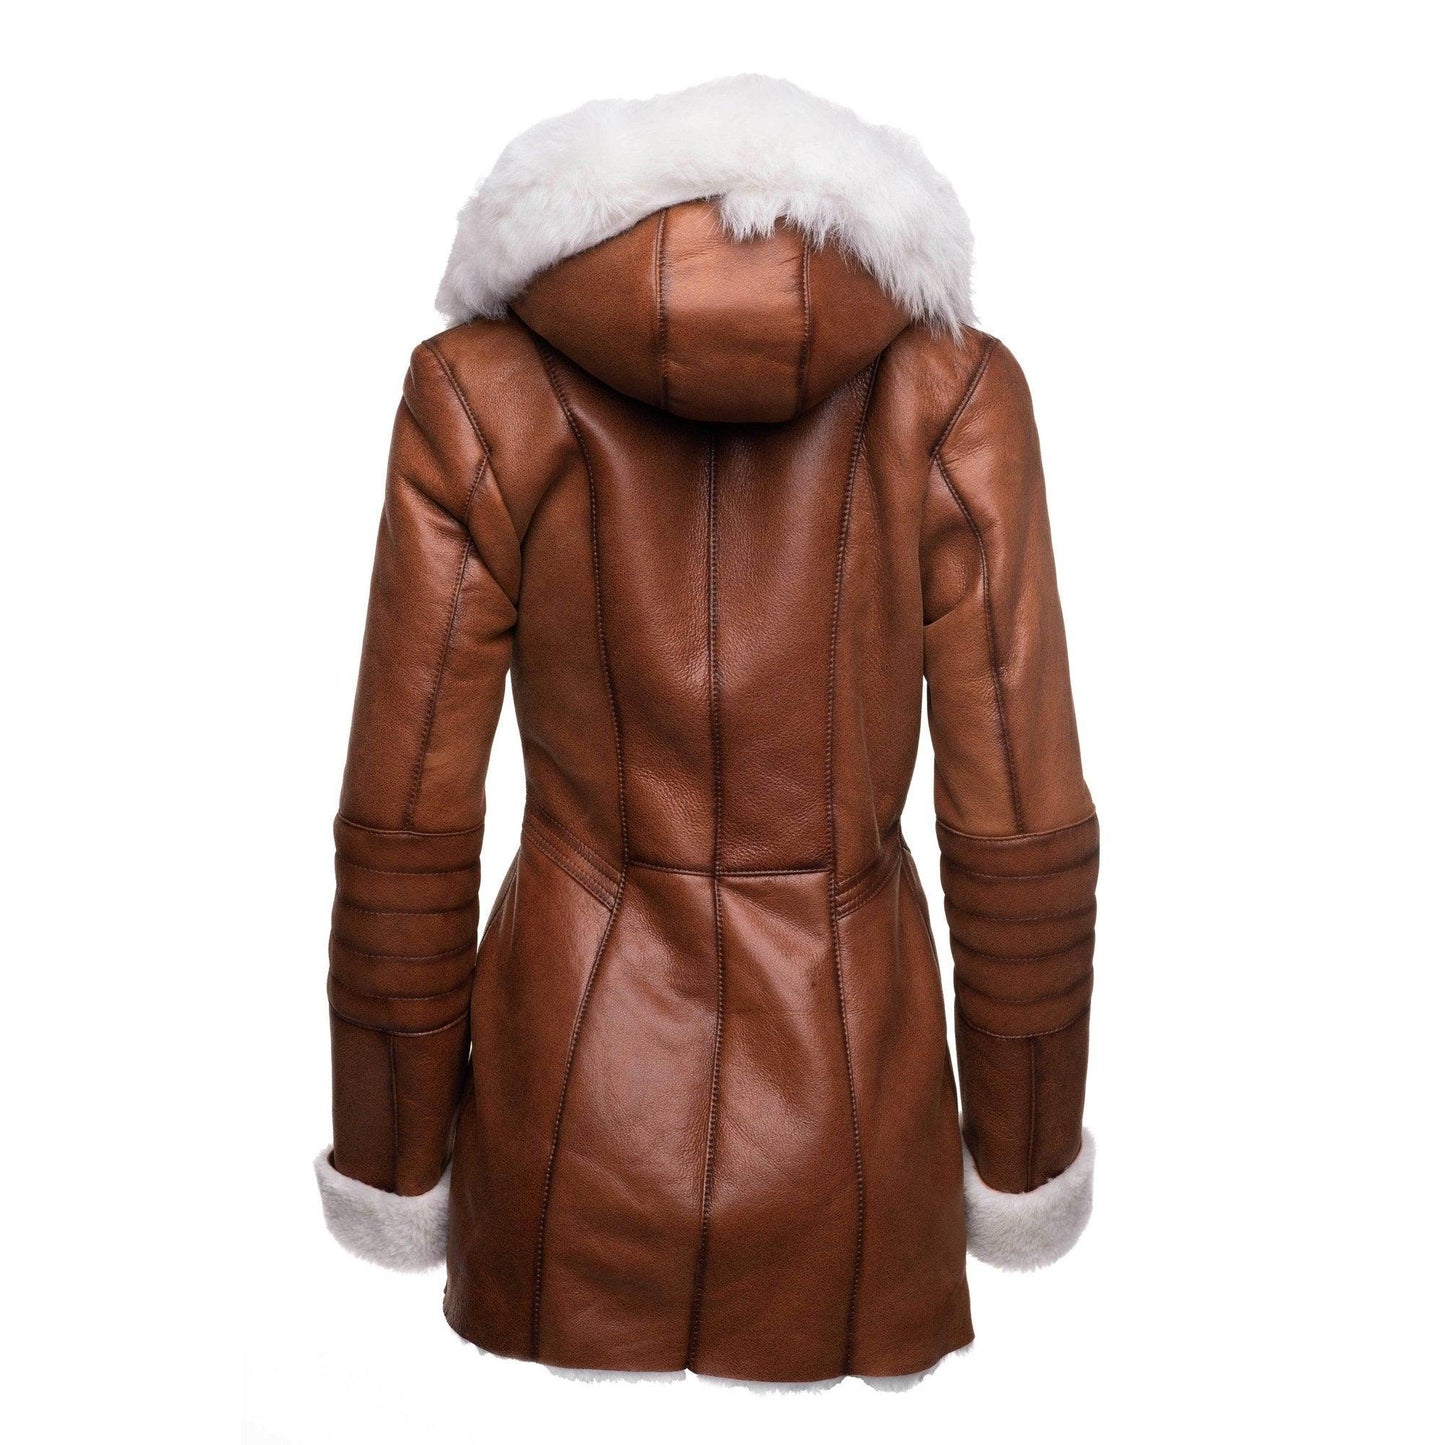 Tan Shearling coat with fox fur trim Hoodie - Leather Loom